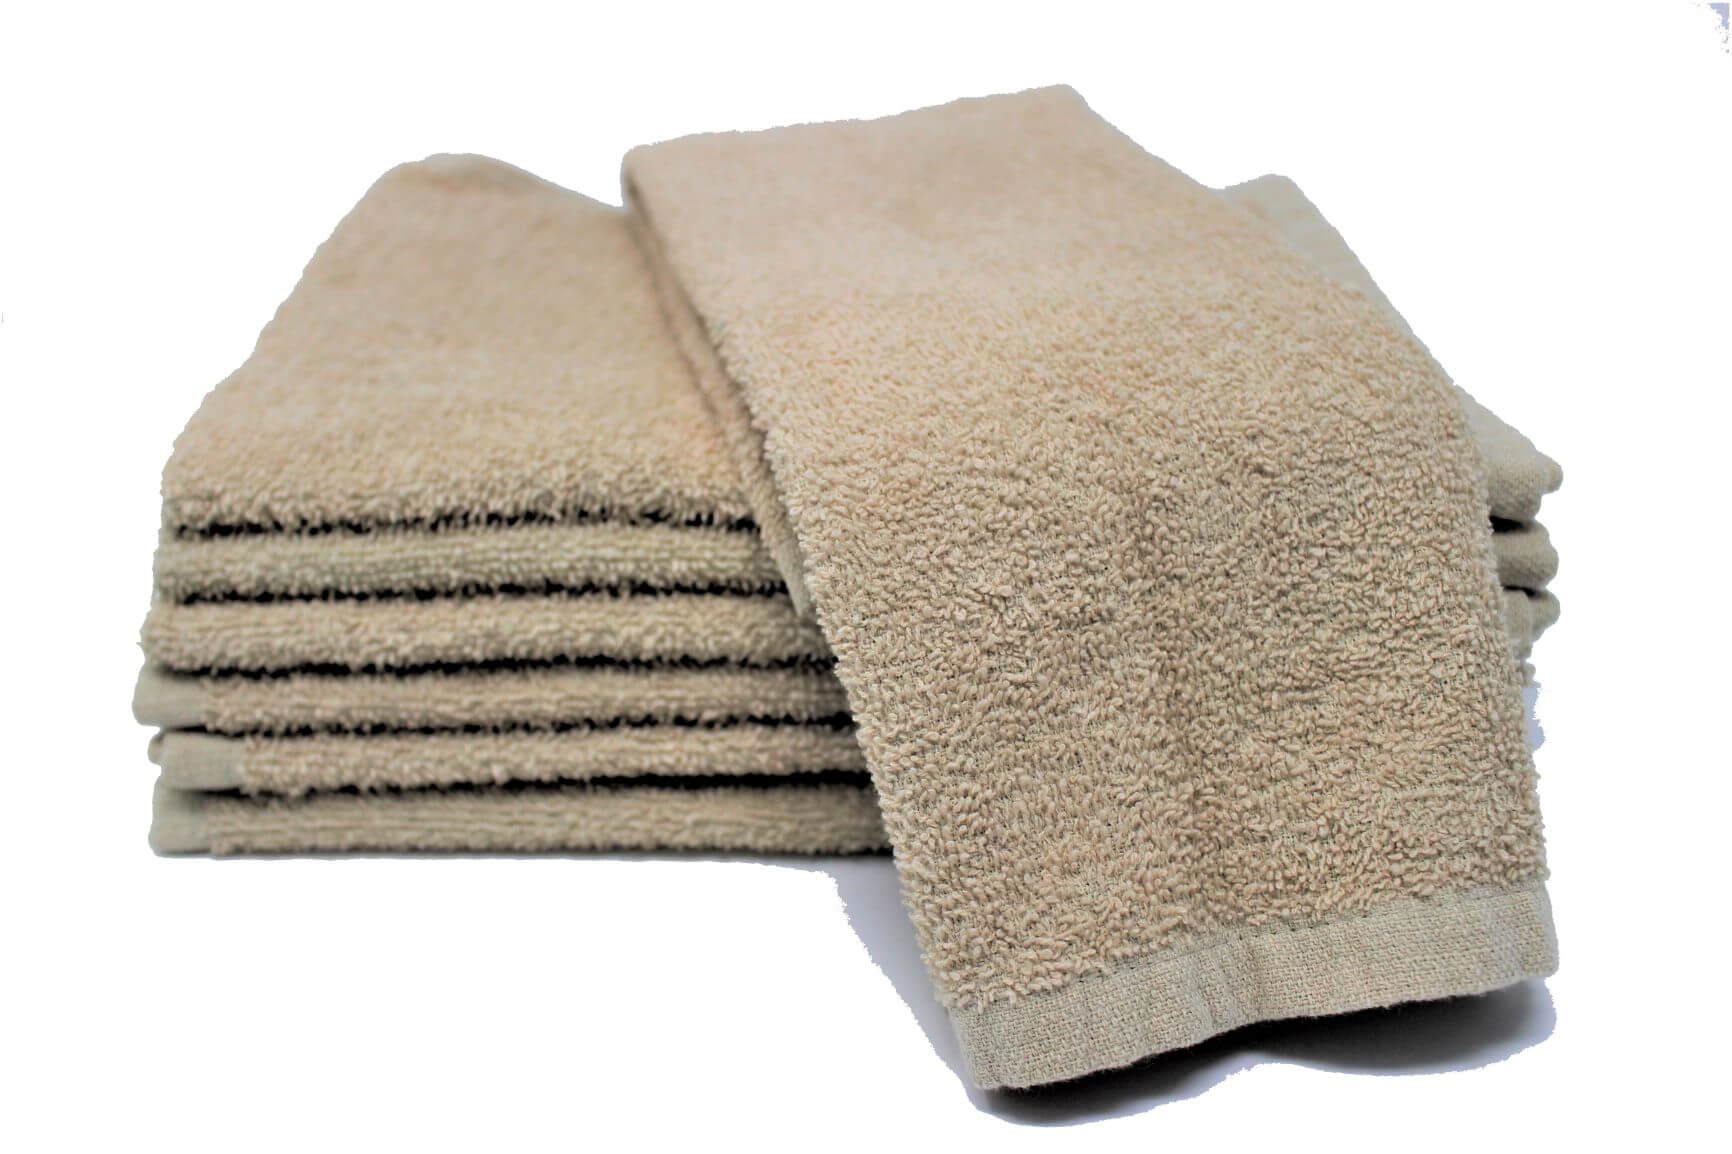 15 x 25 Economy White Hand Towels for Beauty Salon Bulk, 100% Cotton